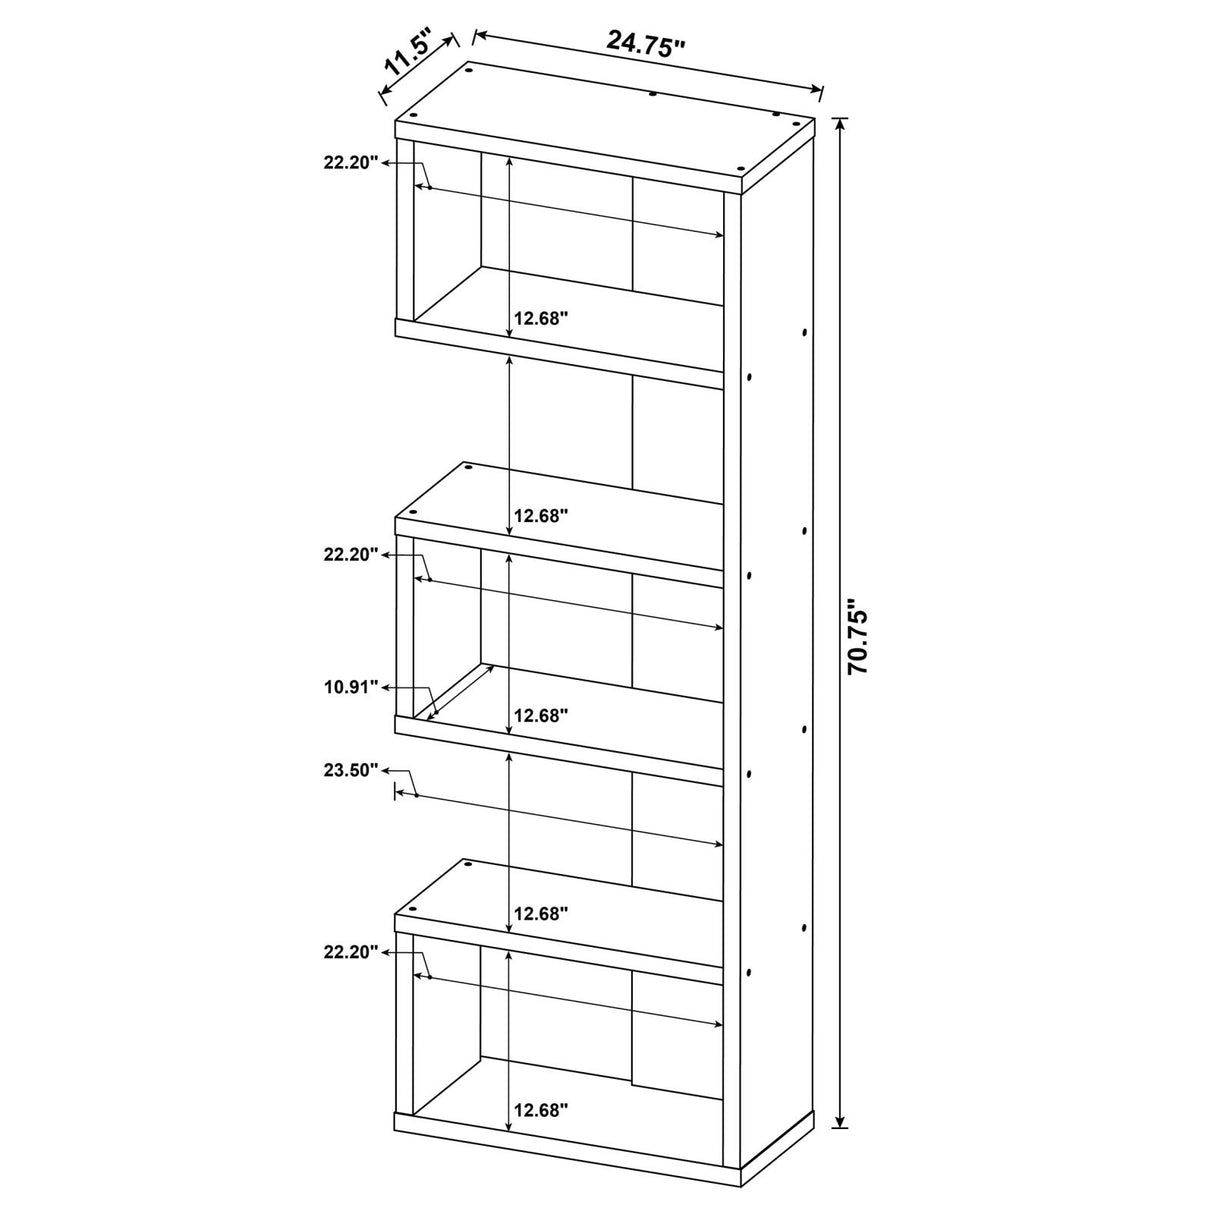 Joey 5-tier Bookcase Weathered Grey - 800552 - Luna Furniture